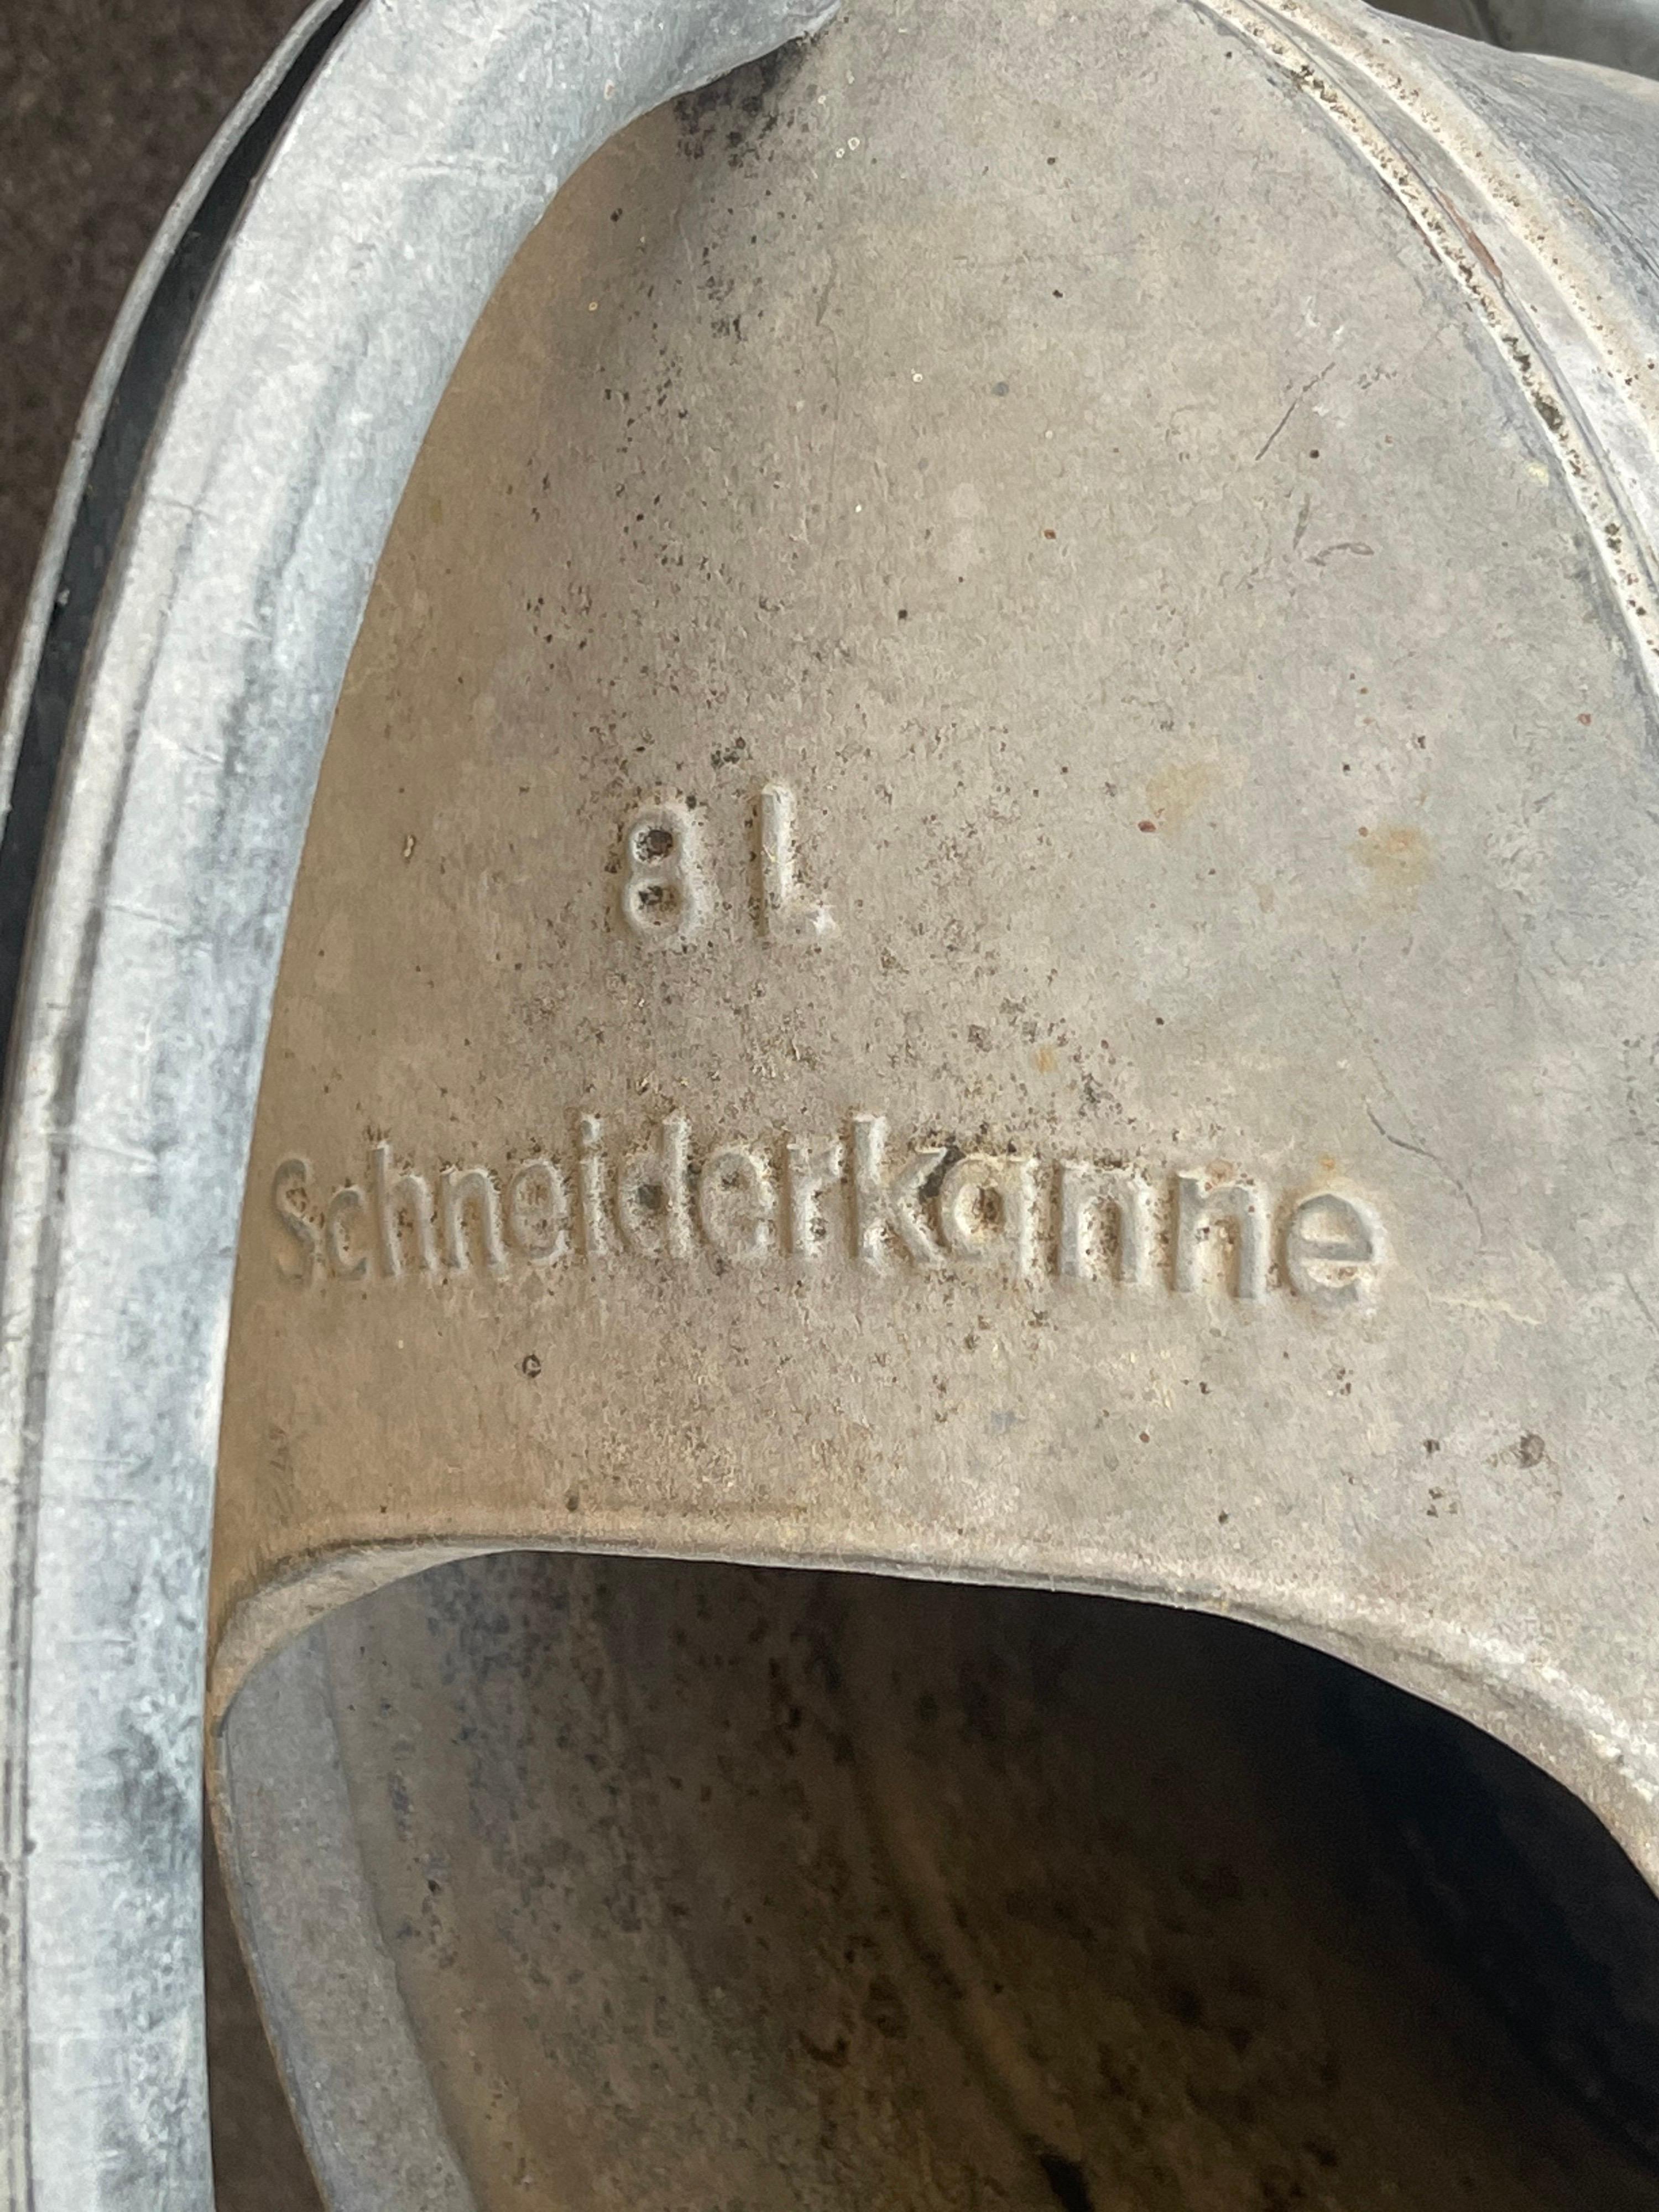 20th Century Vintage Galvanized Steel Watering Can by Schneiderkanne For Sale